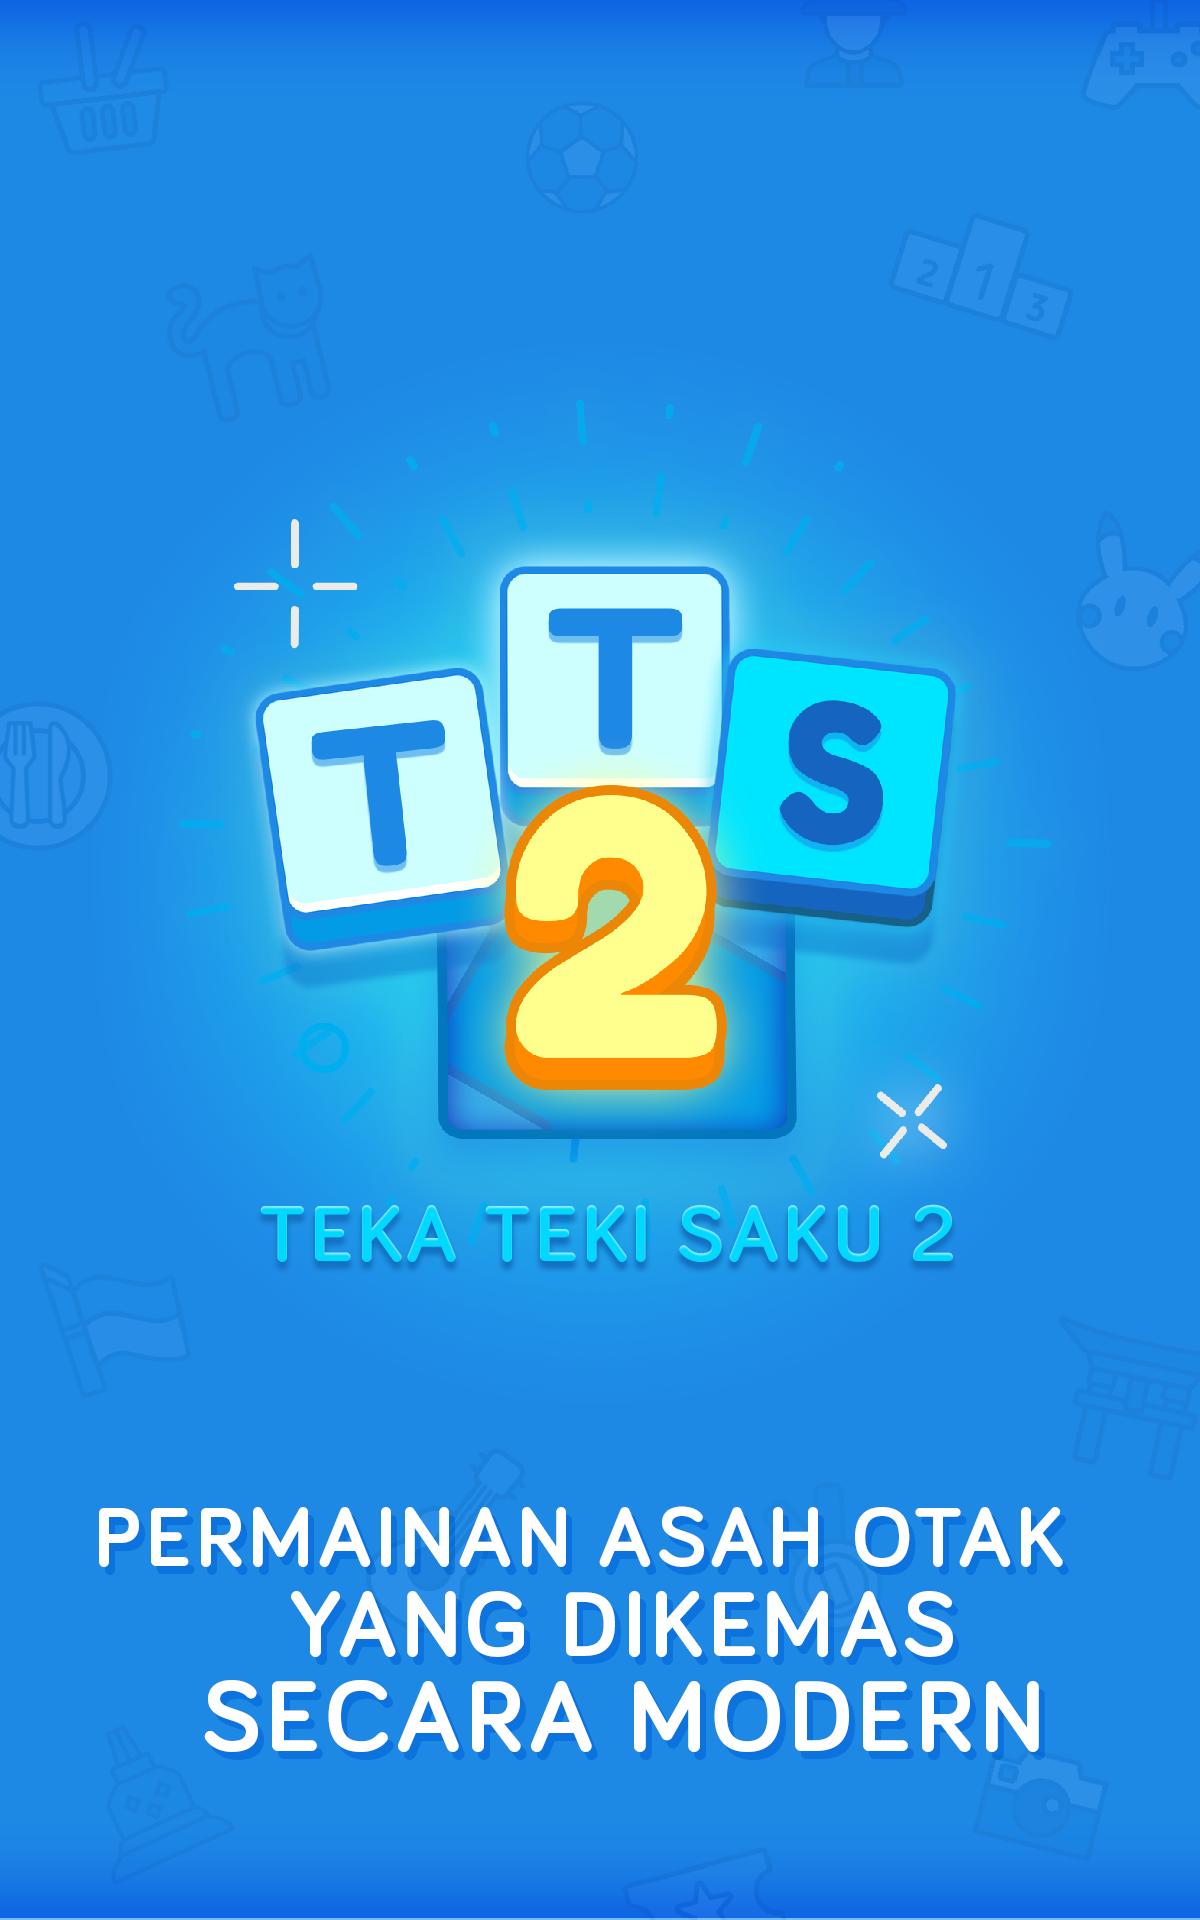 Teka Teki Saku 2 Tts Trivia For Android Apk Download